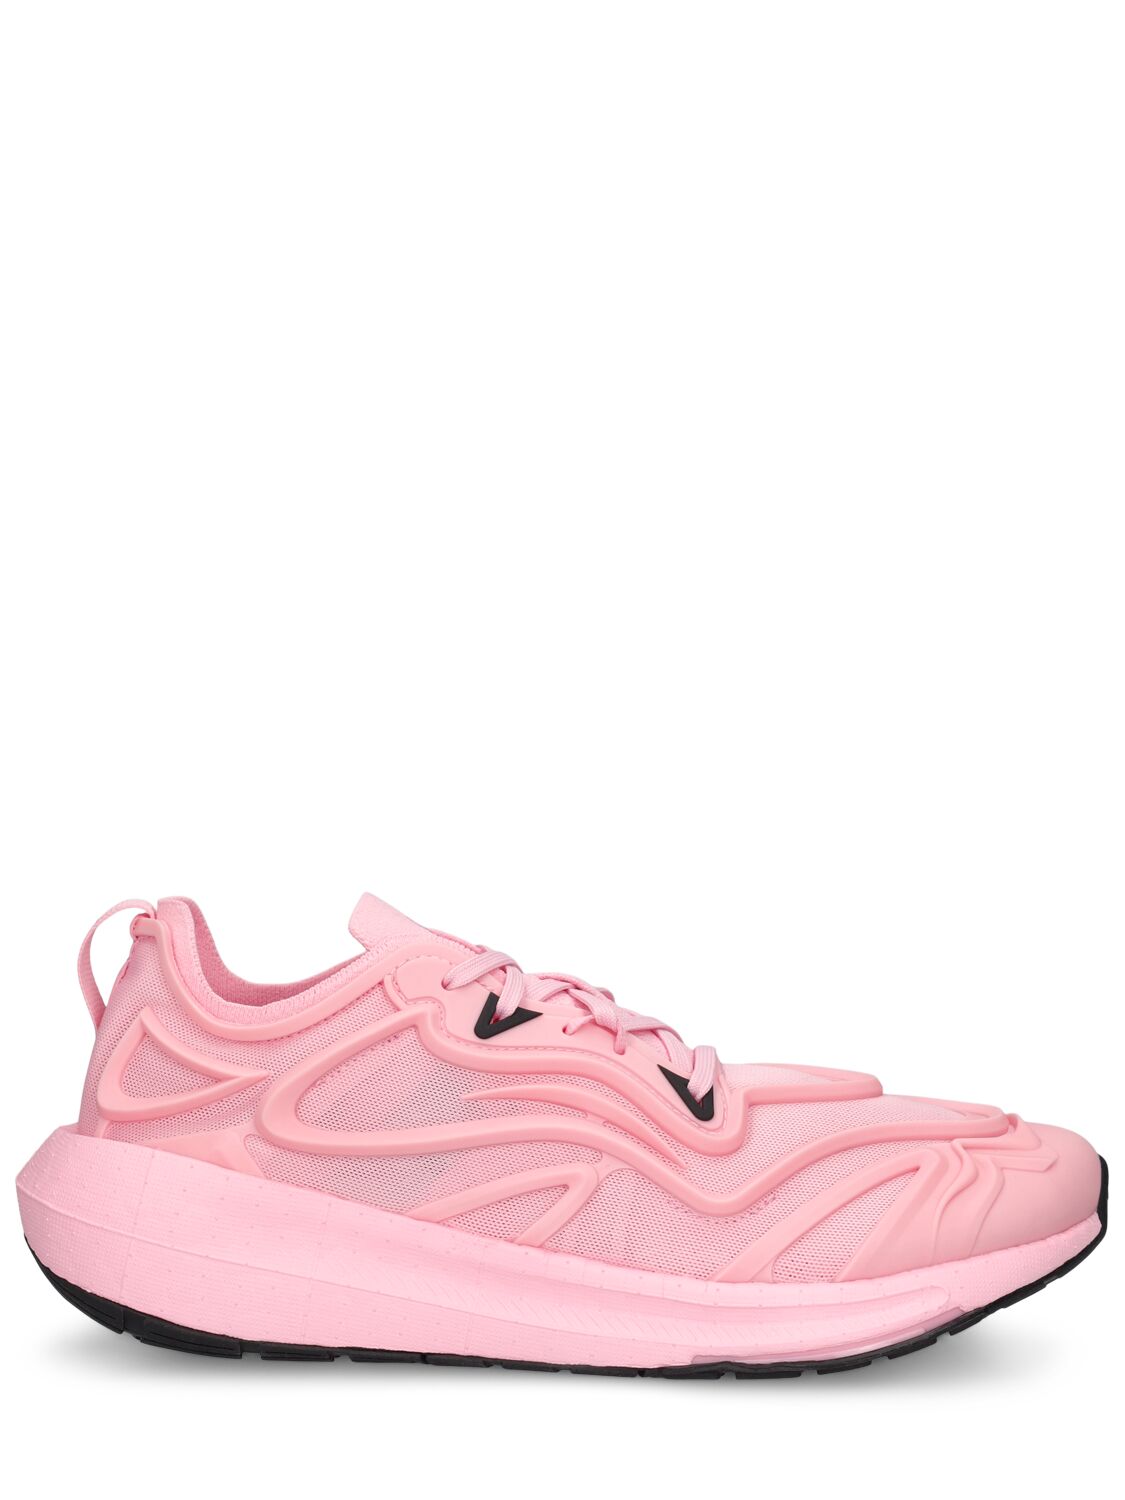 Adidas By Stella Mccartney Asmc Ultraboost Speed Sneakers In Pink